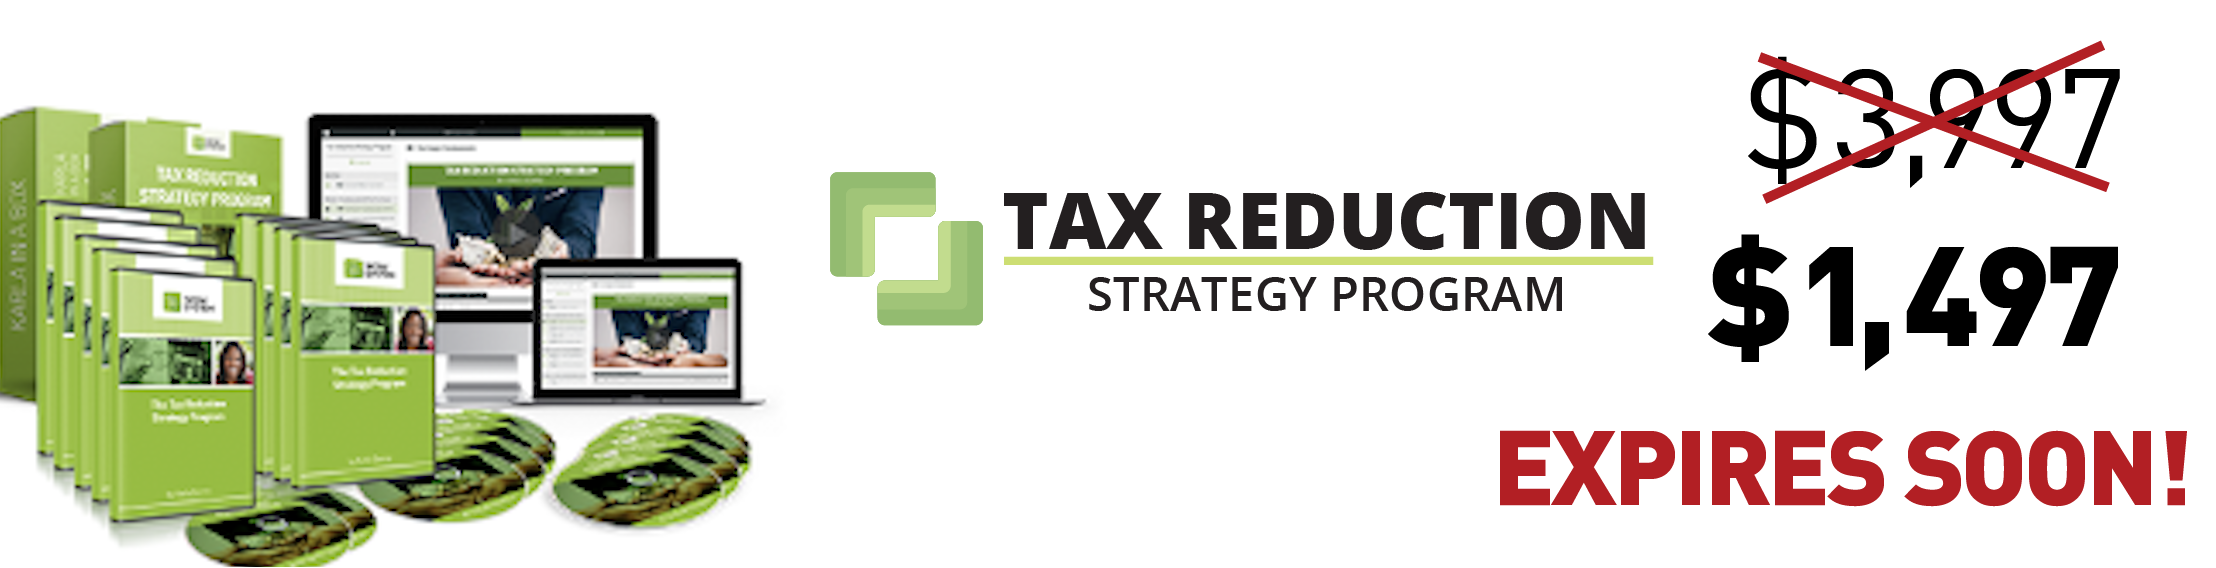 tax-reduction-program-checkout